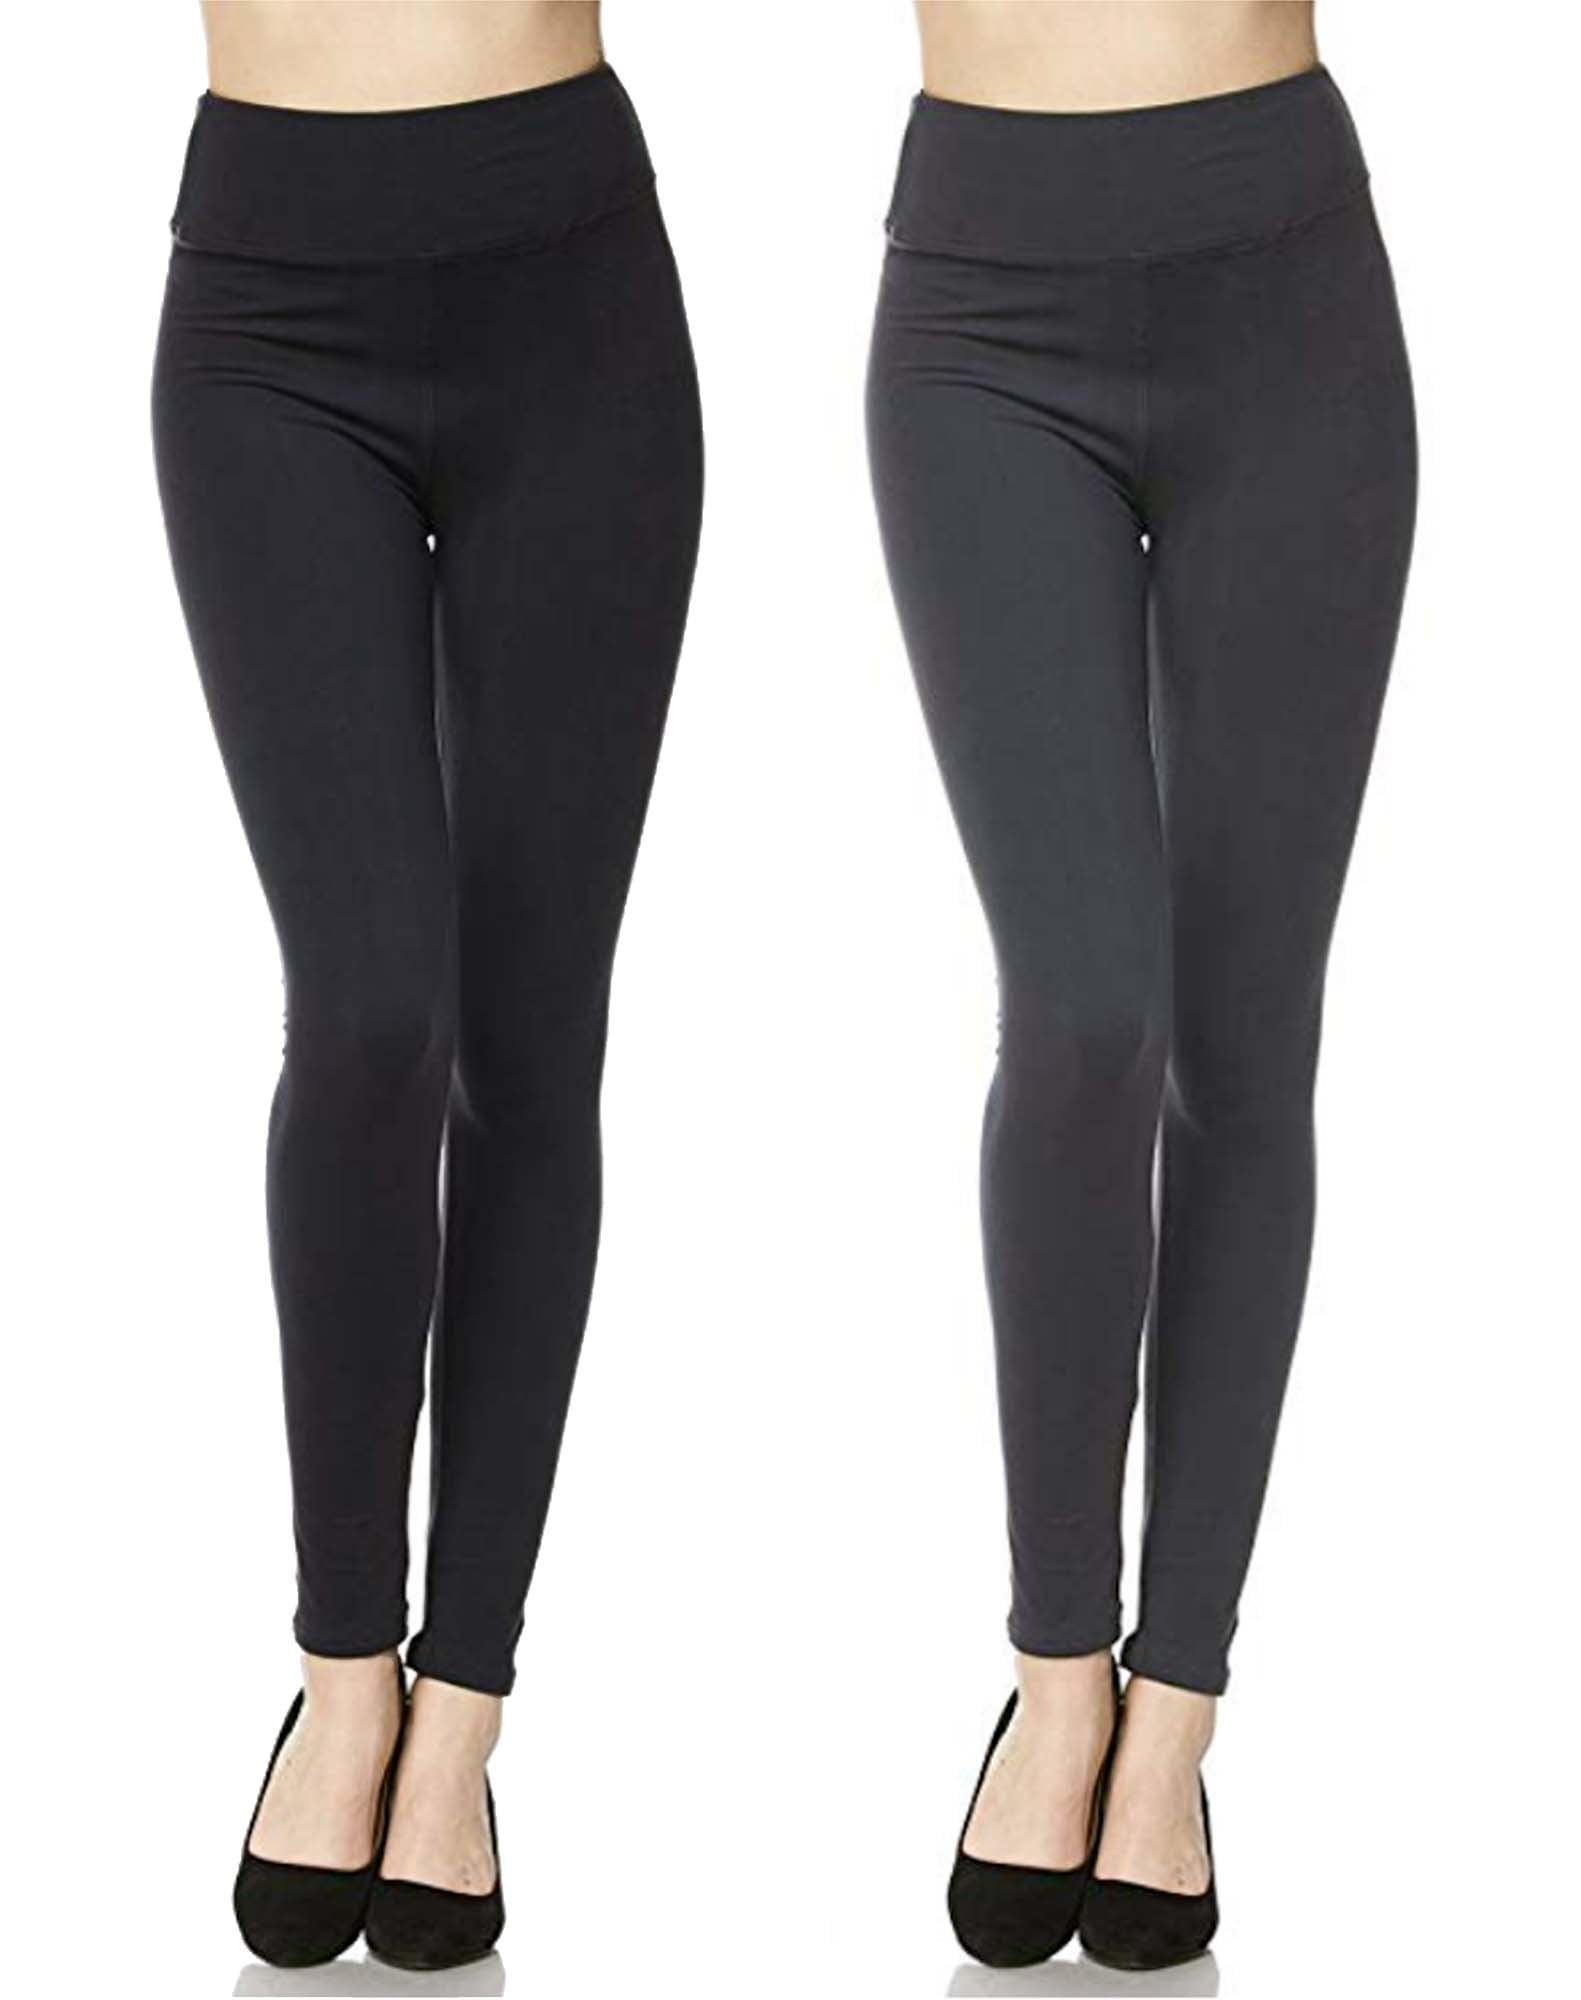 Zenana Outfitters Women's Full Length Cotton Solid Legging, 2pack